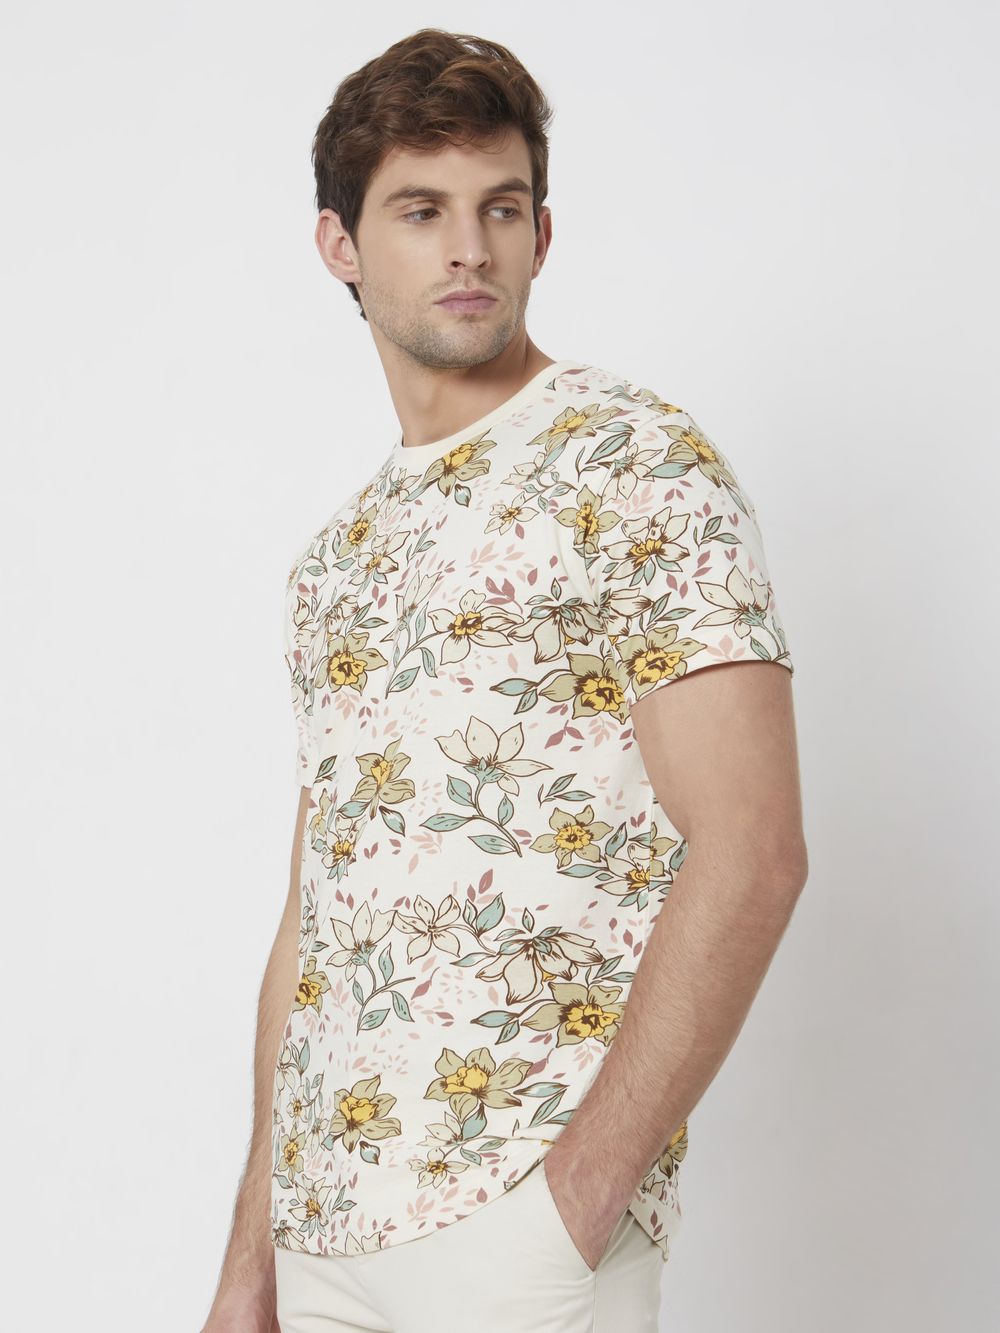 Beige Floral Print Slim Fit Casual T-Shirt